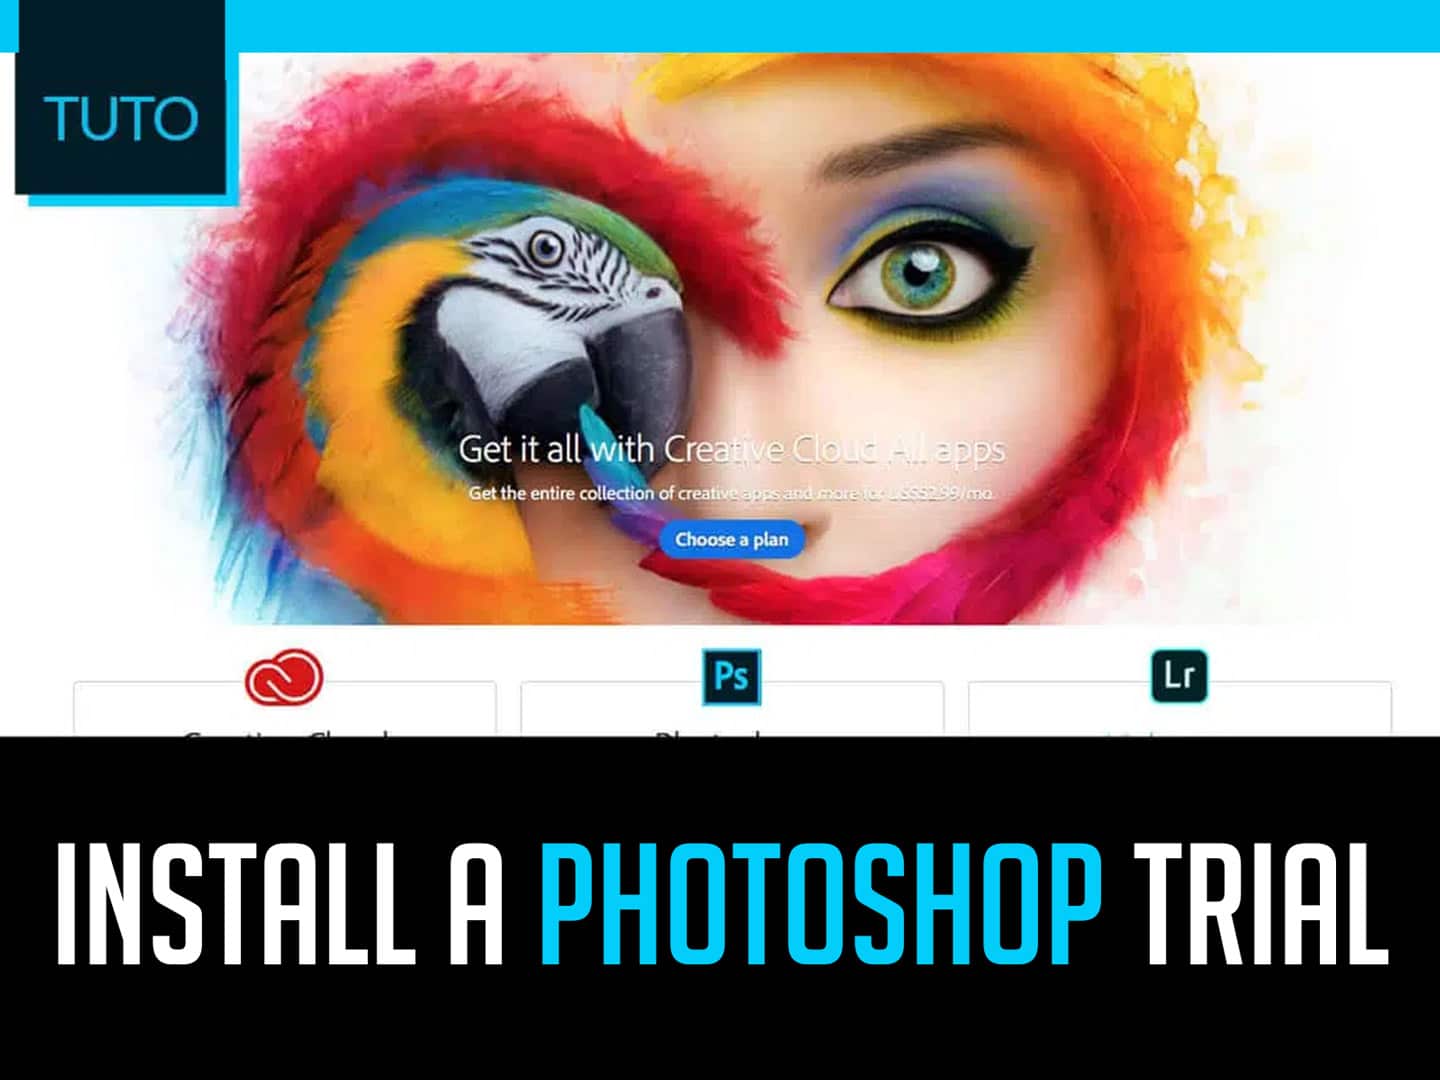 Photoshop free trial tutorial